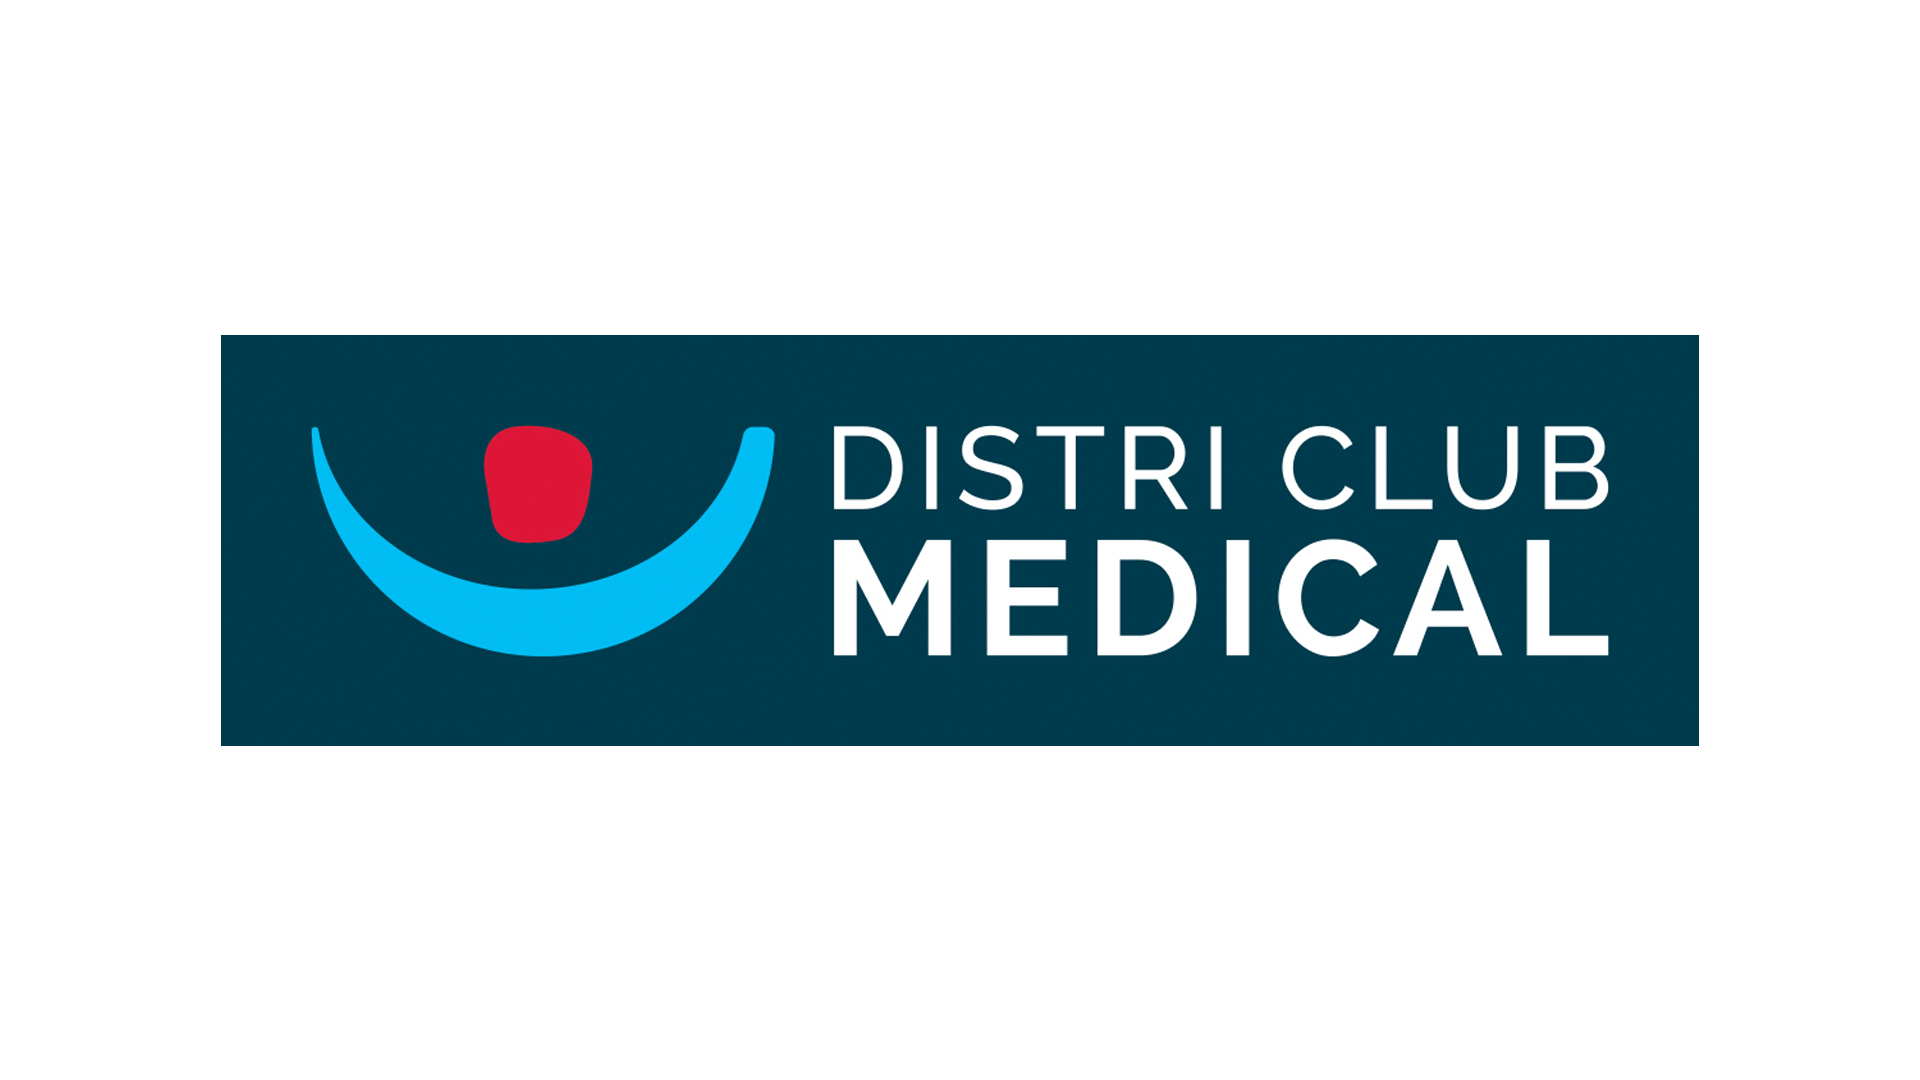 Districlub medical logo